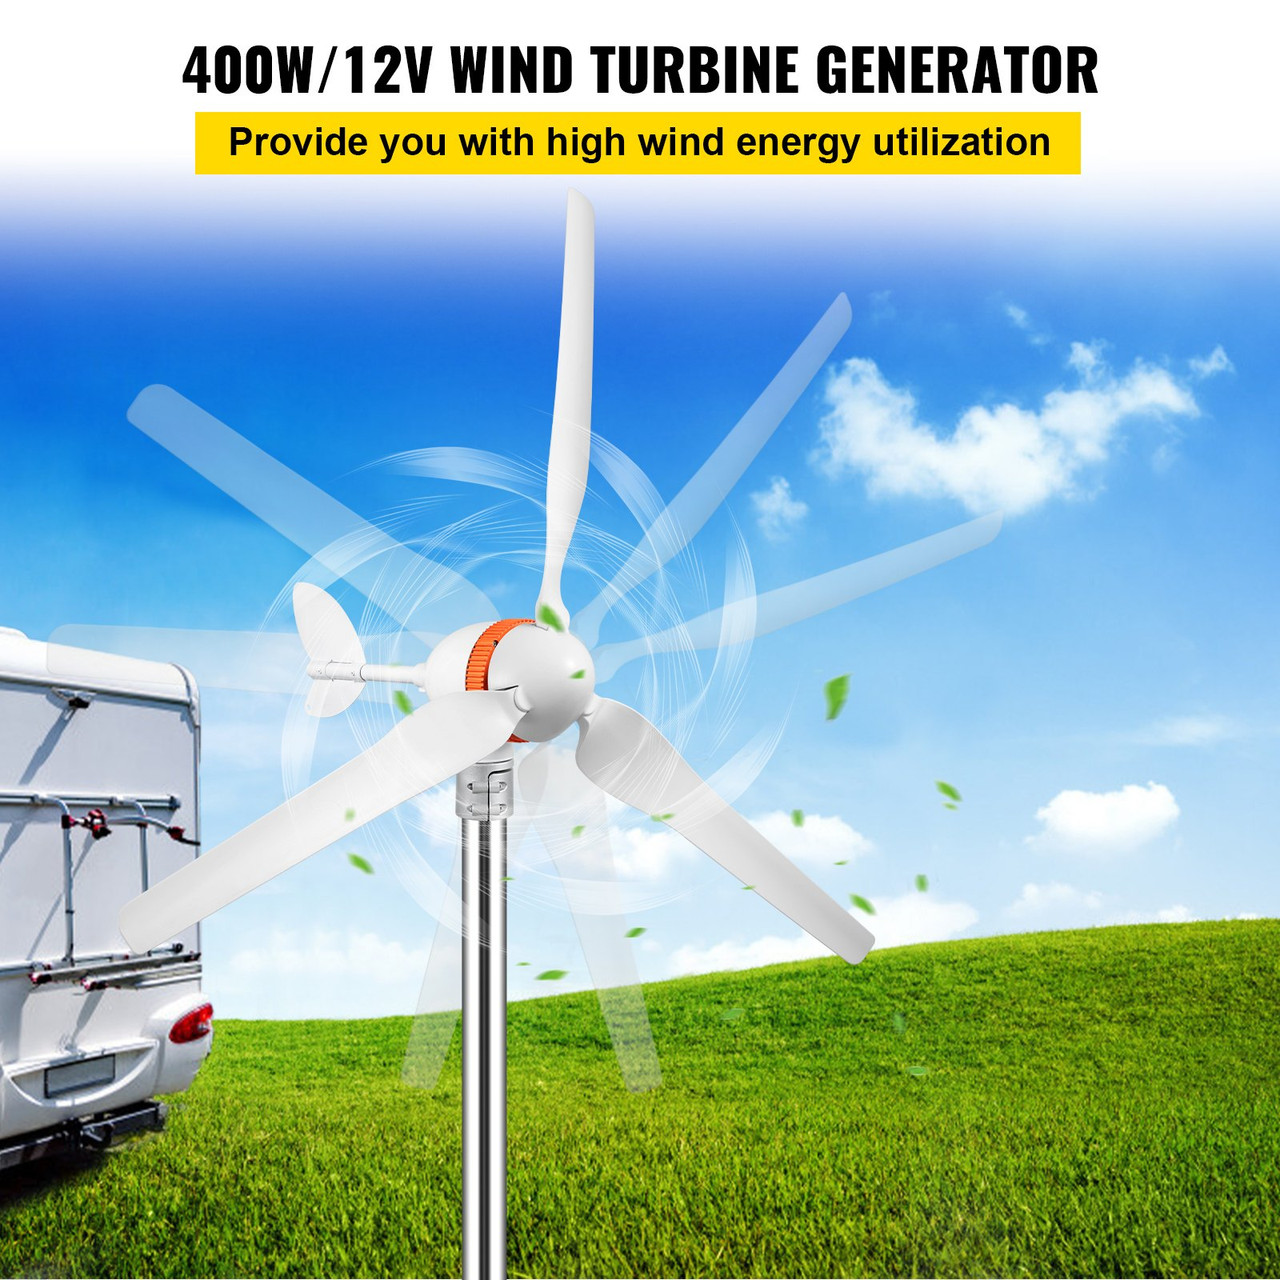 Wind Turbine Generator, 12V/AC Wind Turbine Kit, 400W Wind Power Generator w/Wind & Solar Controller 3 Blades Auto Adjust Windward Direction Suitable for Terrace, Marine, Motorhome, Chalet, Boat